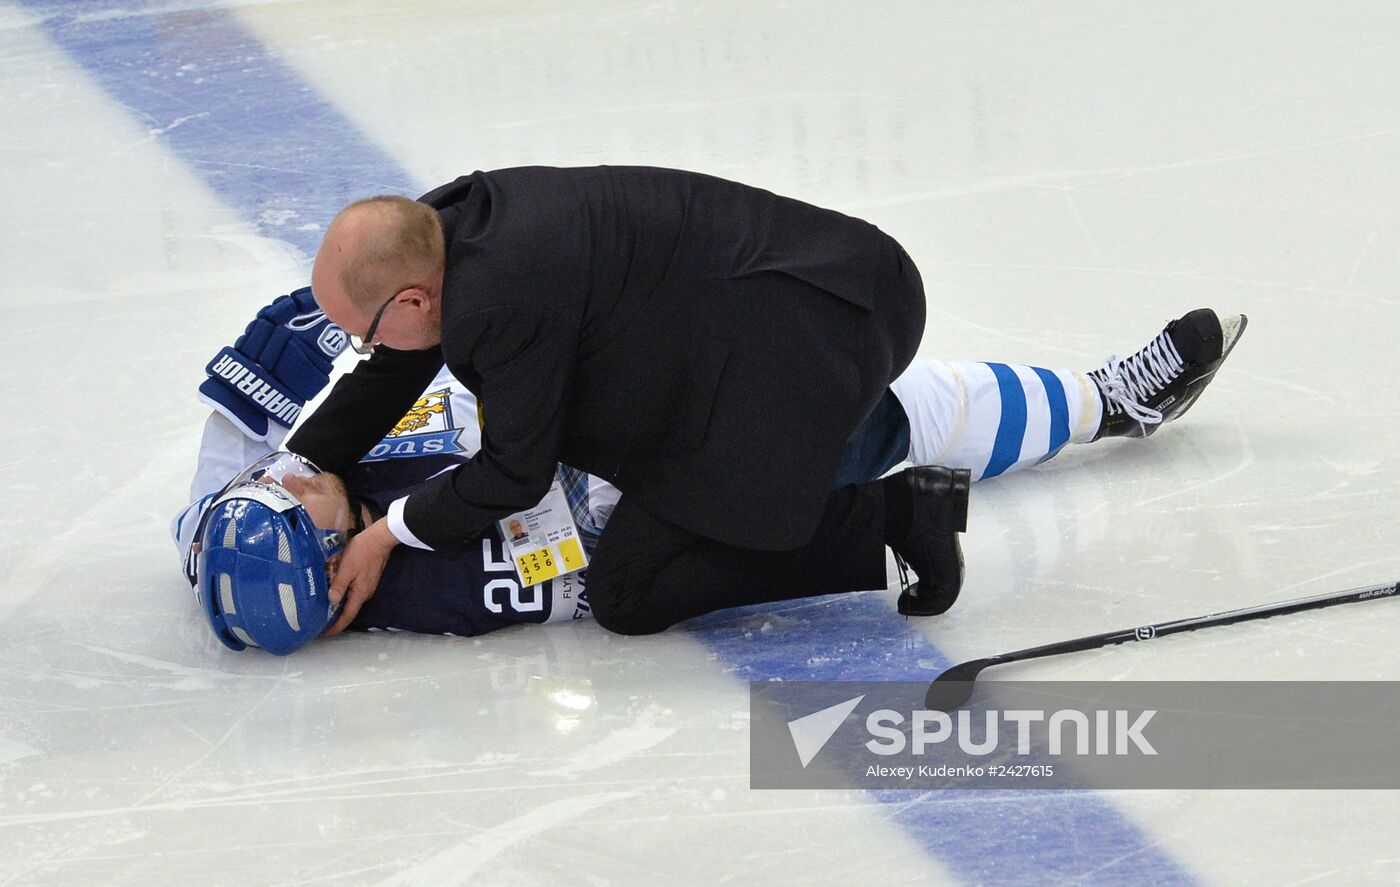 2014 Men's World Ice Hockey Championships. Finland vs. Russia